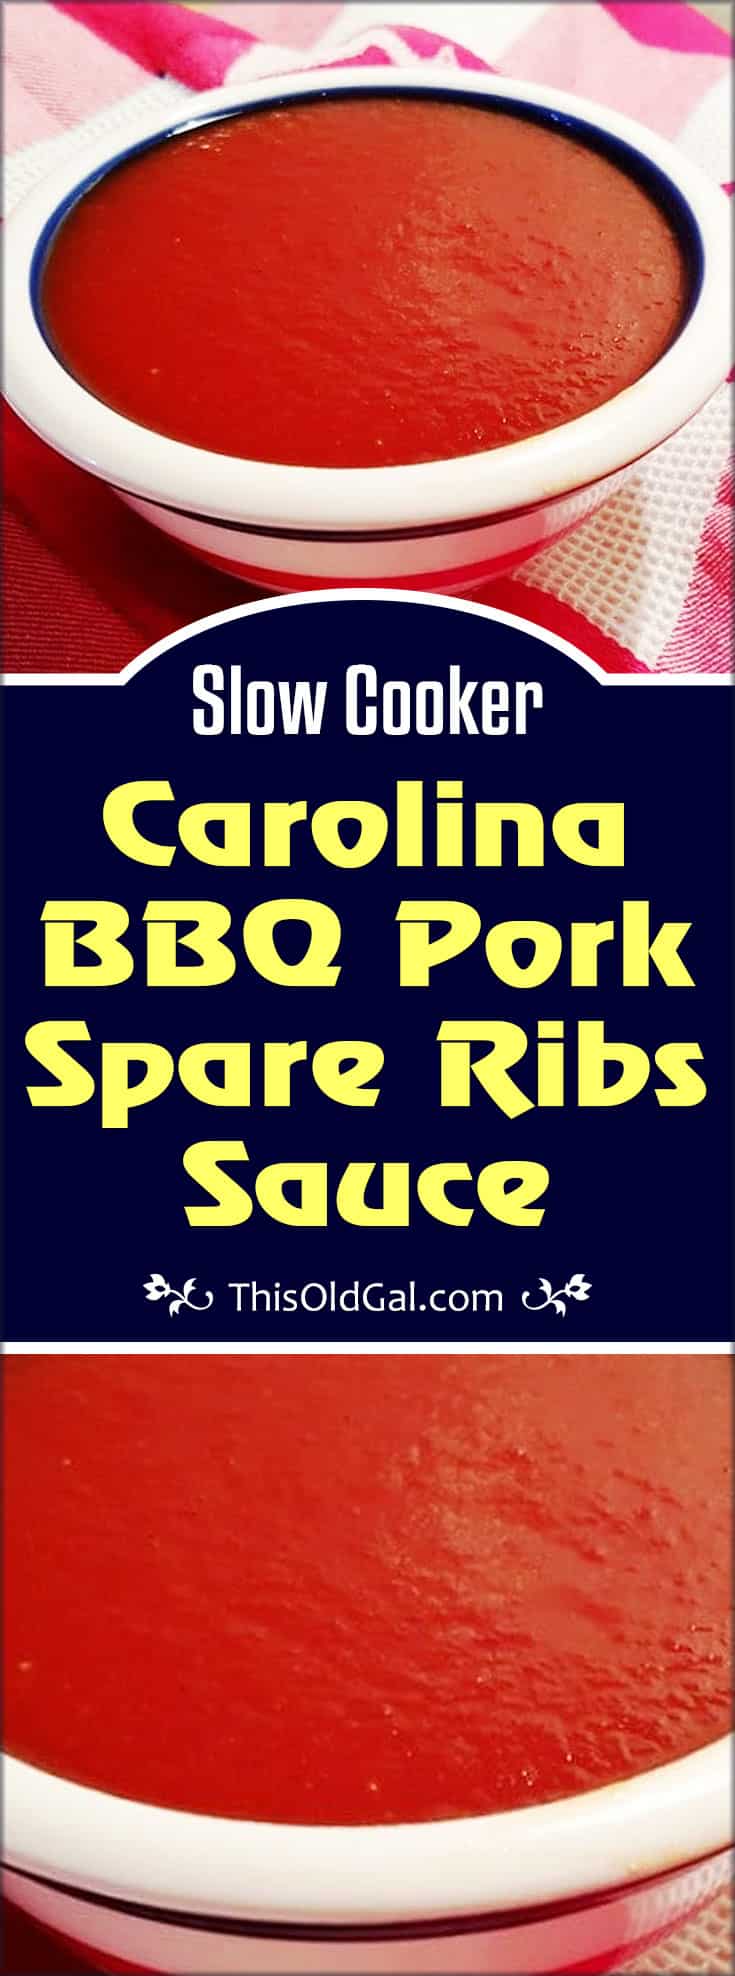 Slow Cooker Carolina BBQ Pork Spare Ribs Sauce